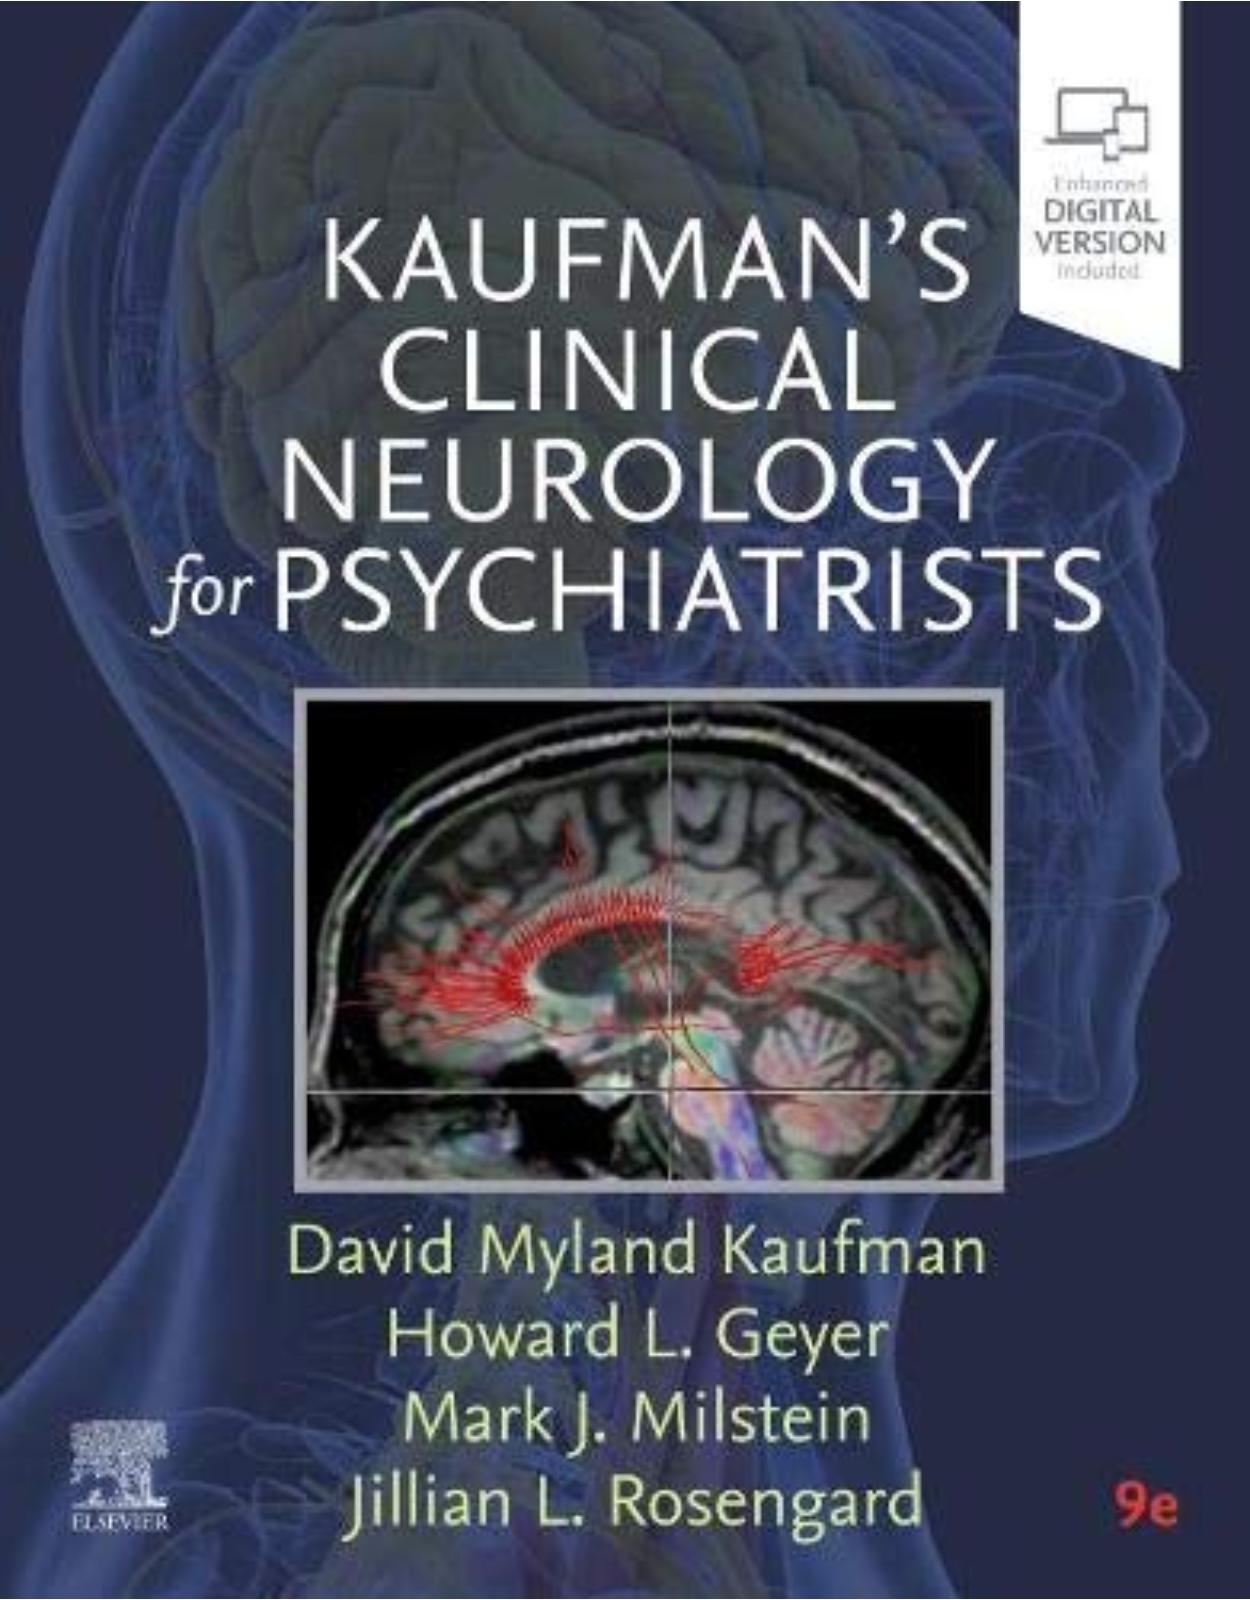 Kaufman’s Clinical Neurology for Psychiatrists